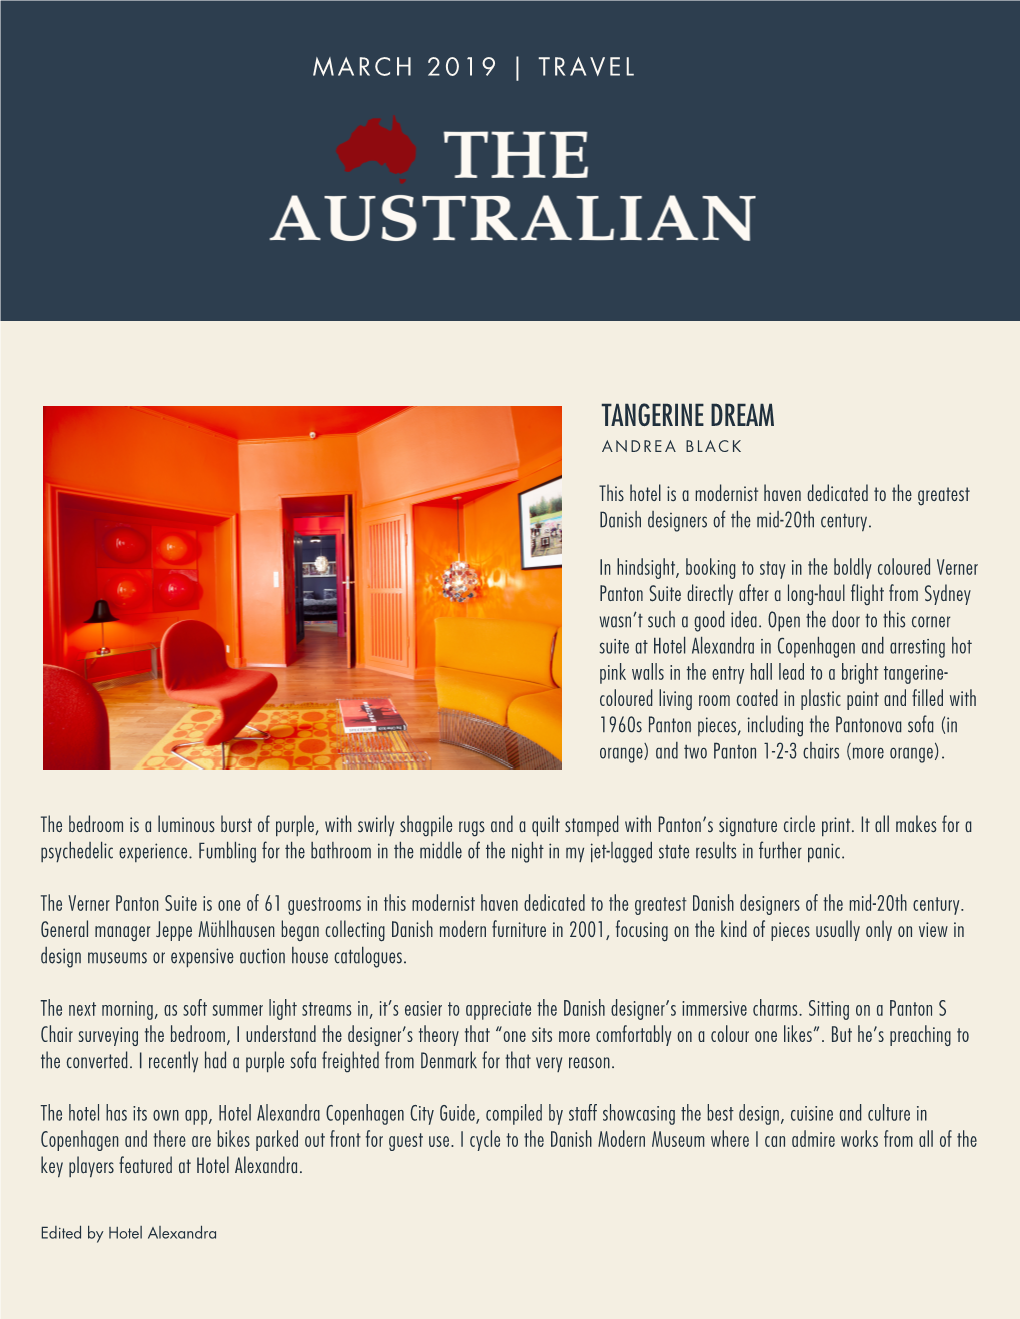 Hotel Alexandra Article